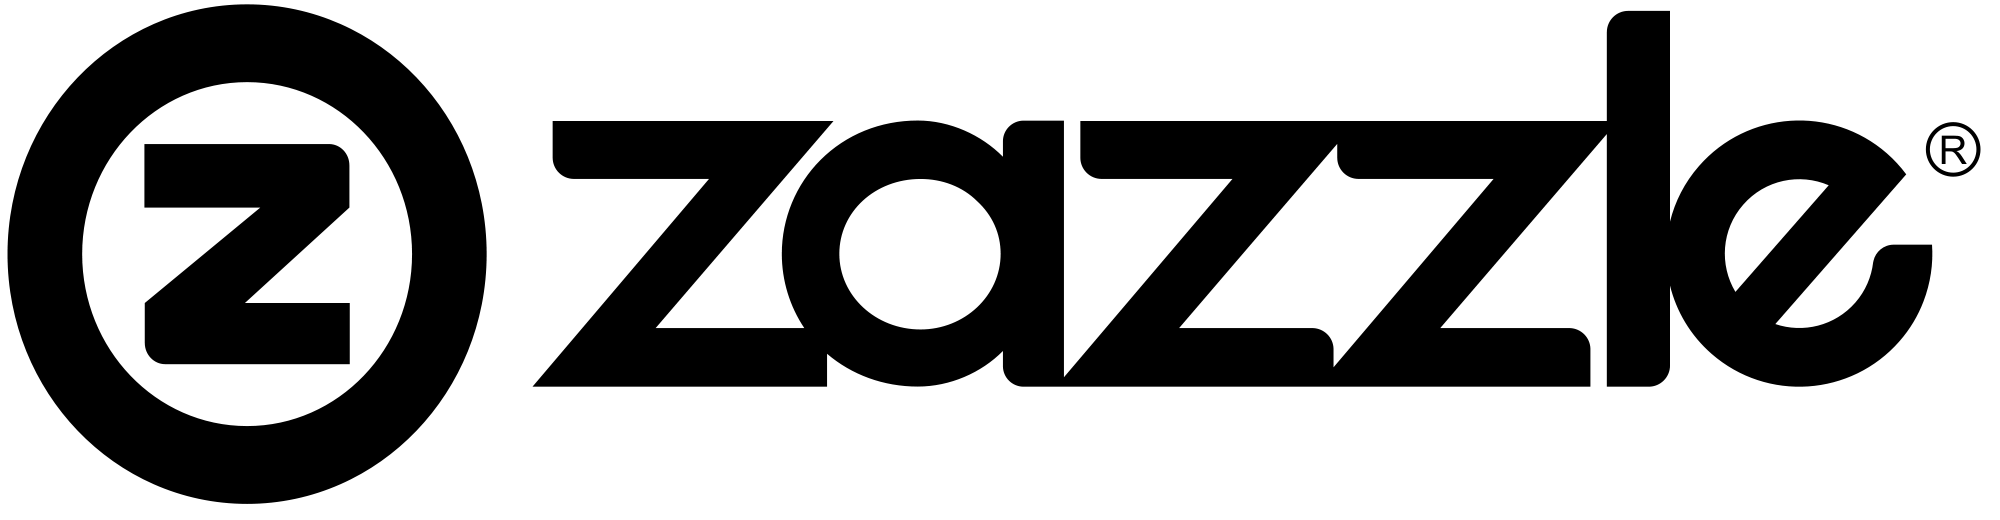 Zazzle.com Logo - File:Zazzle logo.svg - Wikimedia Commons